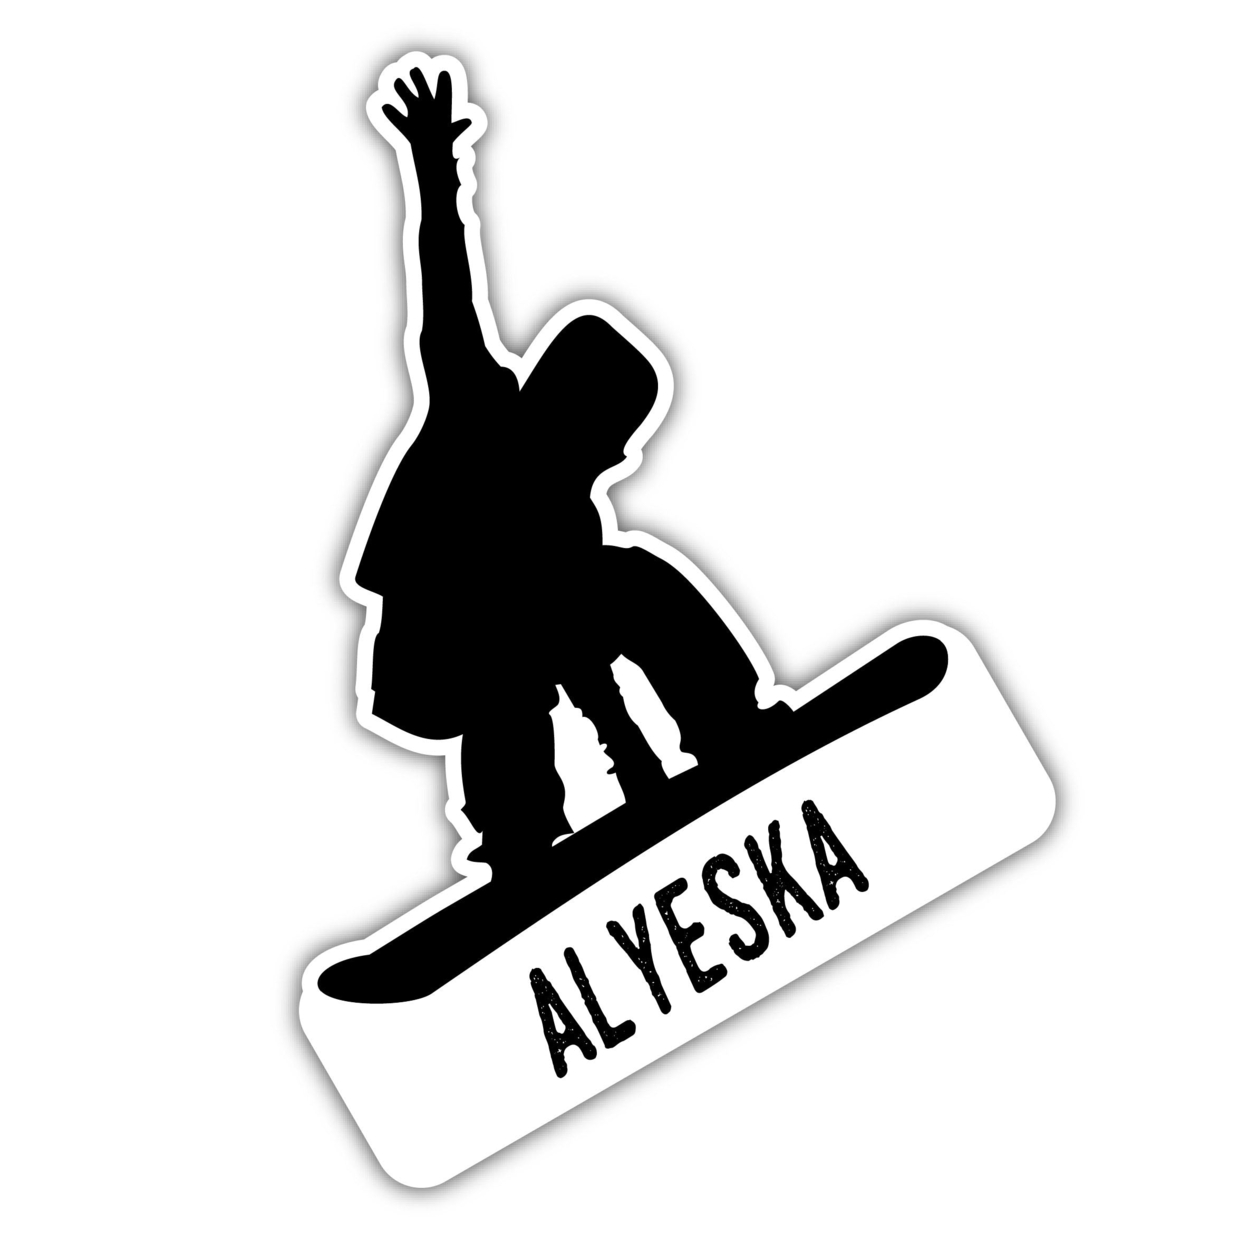 Alyeska Alaska Ski Adventures Souvenir Approximately 5 X 2.5-Inch Vinyl Decal Sticker Goggle Design